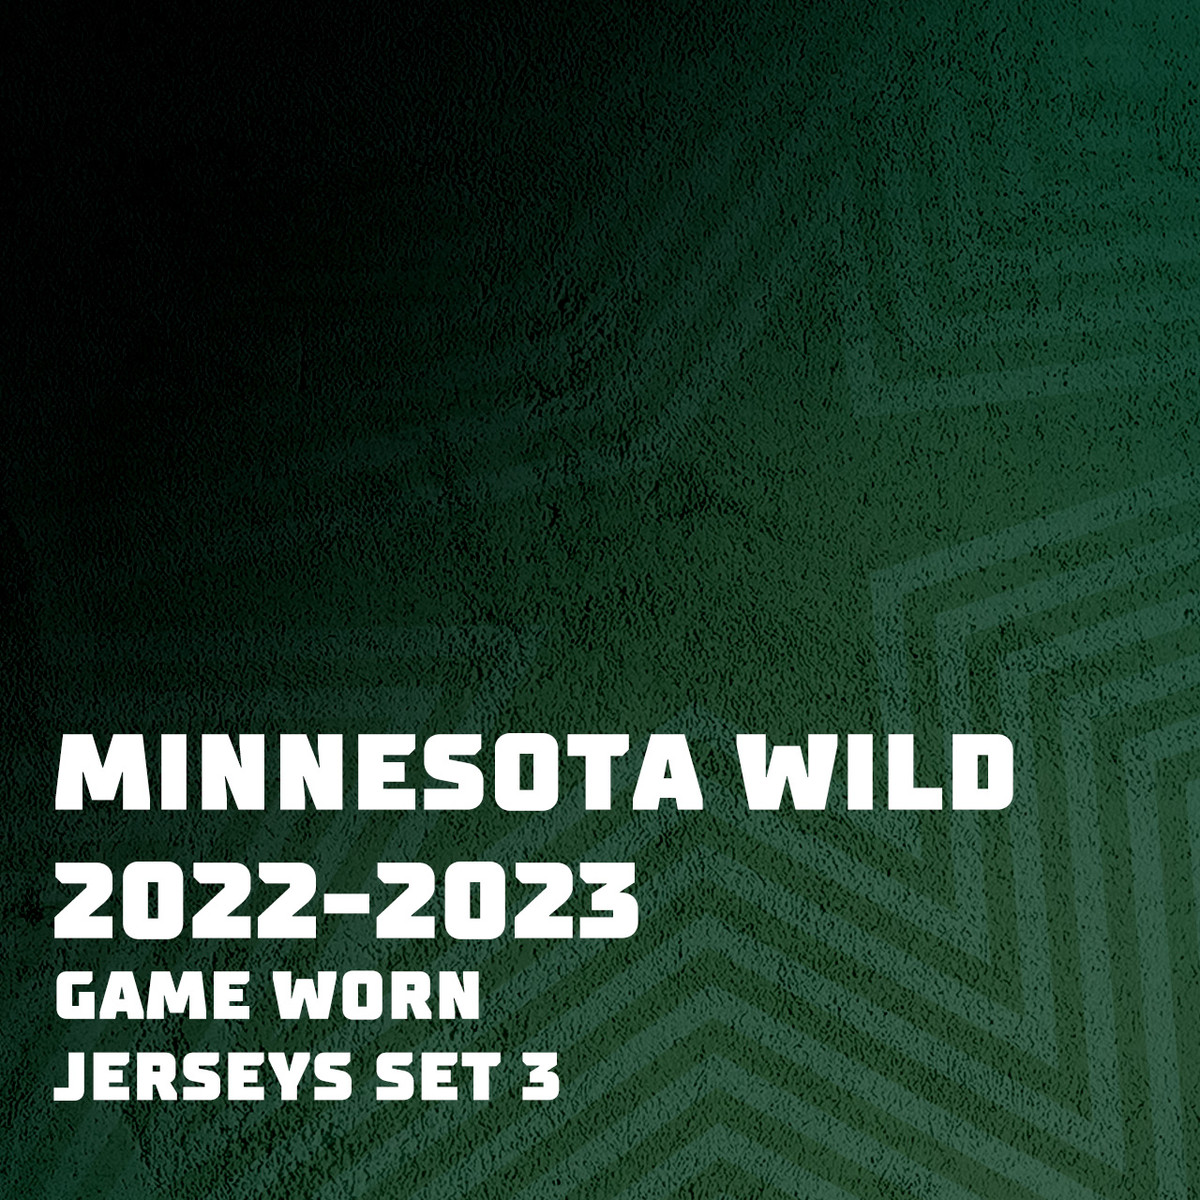 Minnesota Wild 22-23 Game Worn Jerseys Set 3